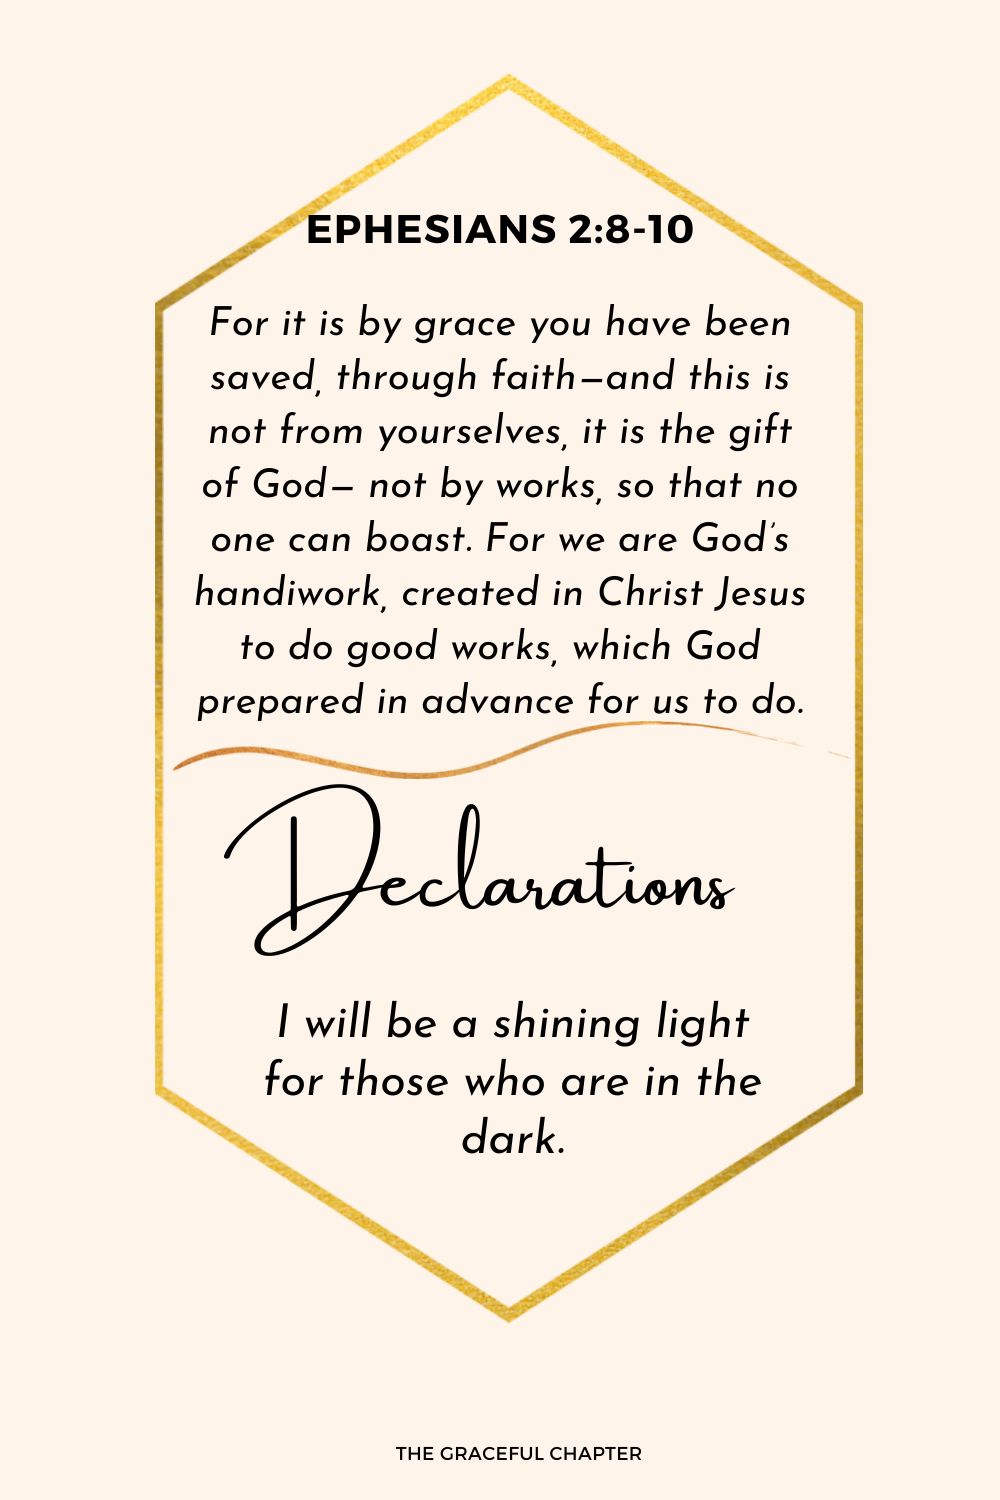 Declaration - Ephesians 2:8-10